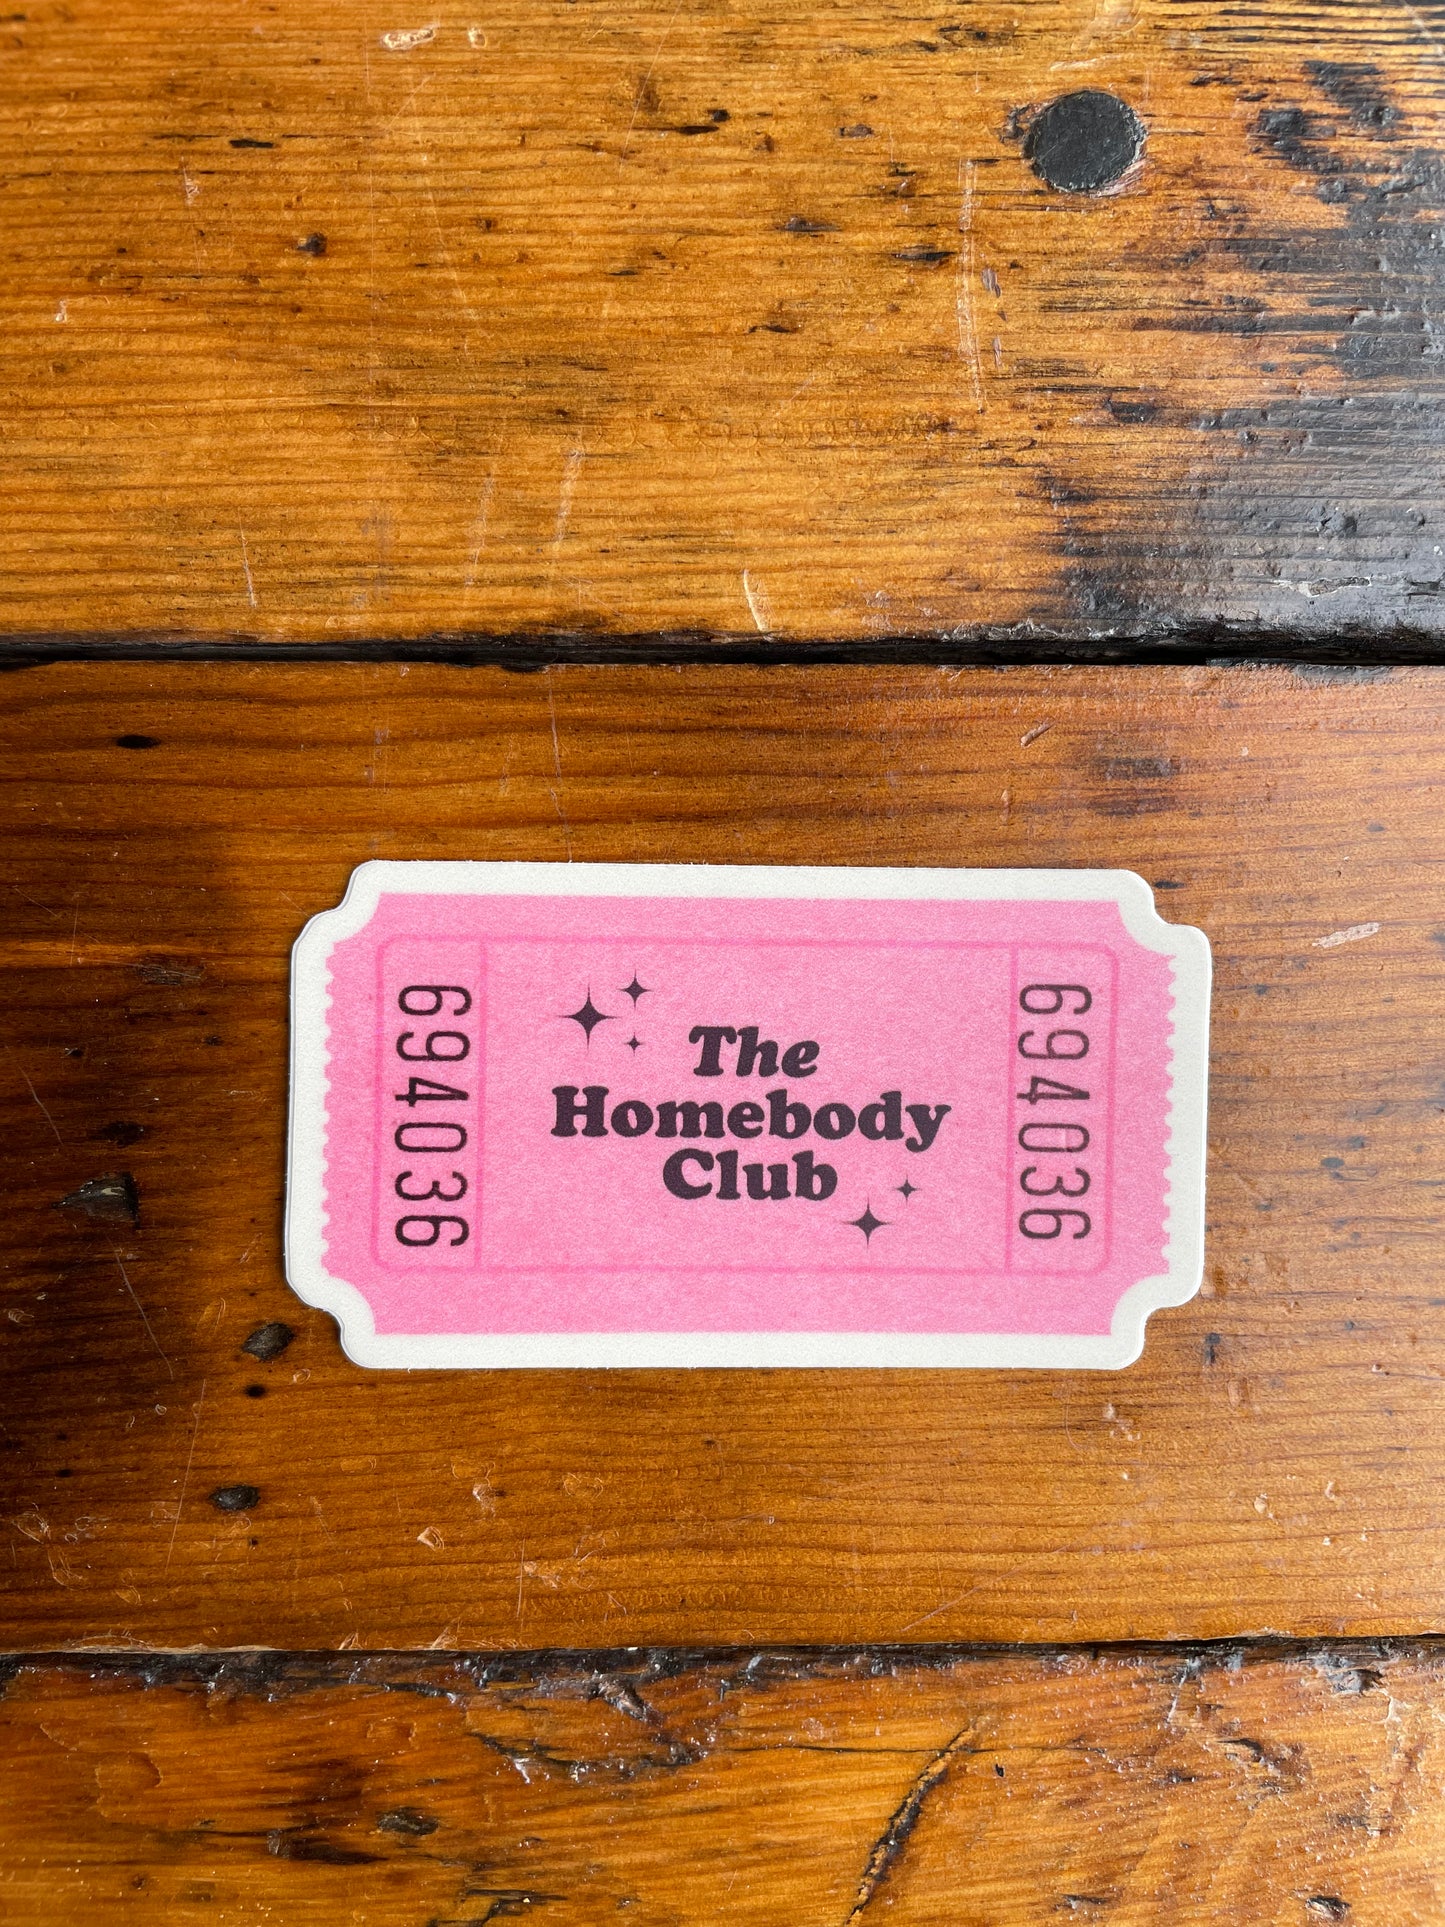 The Homebody Club